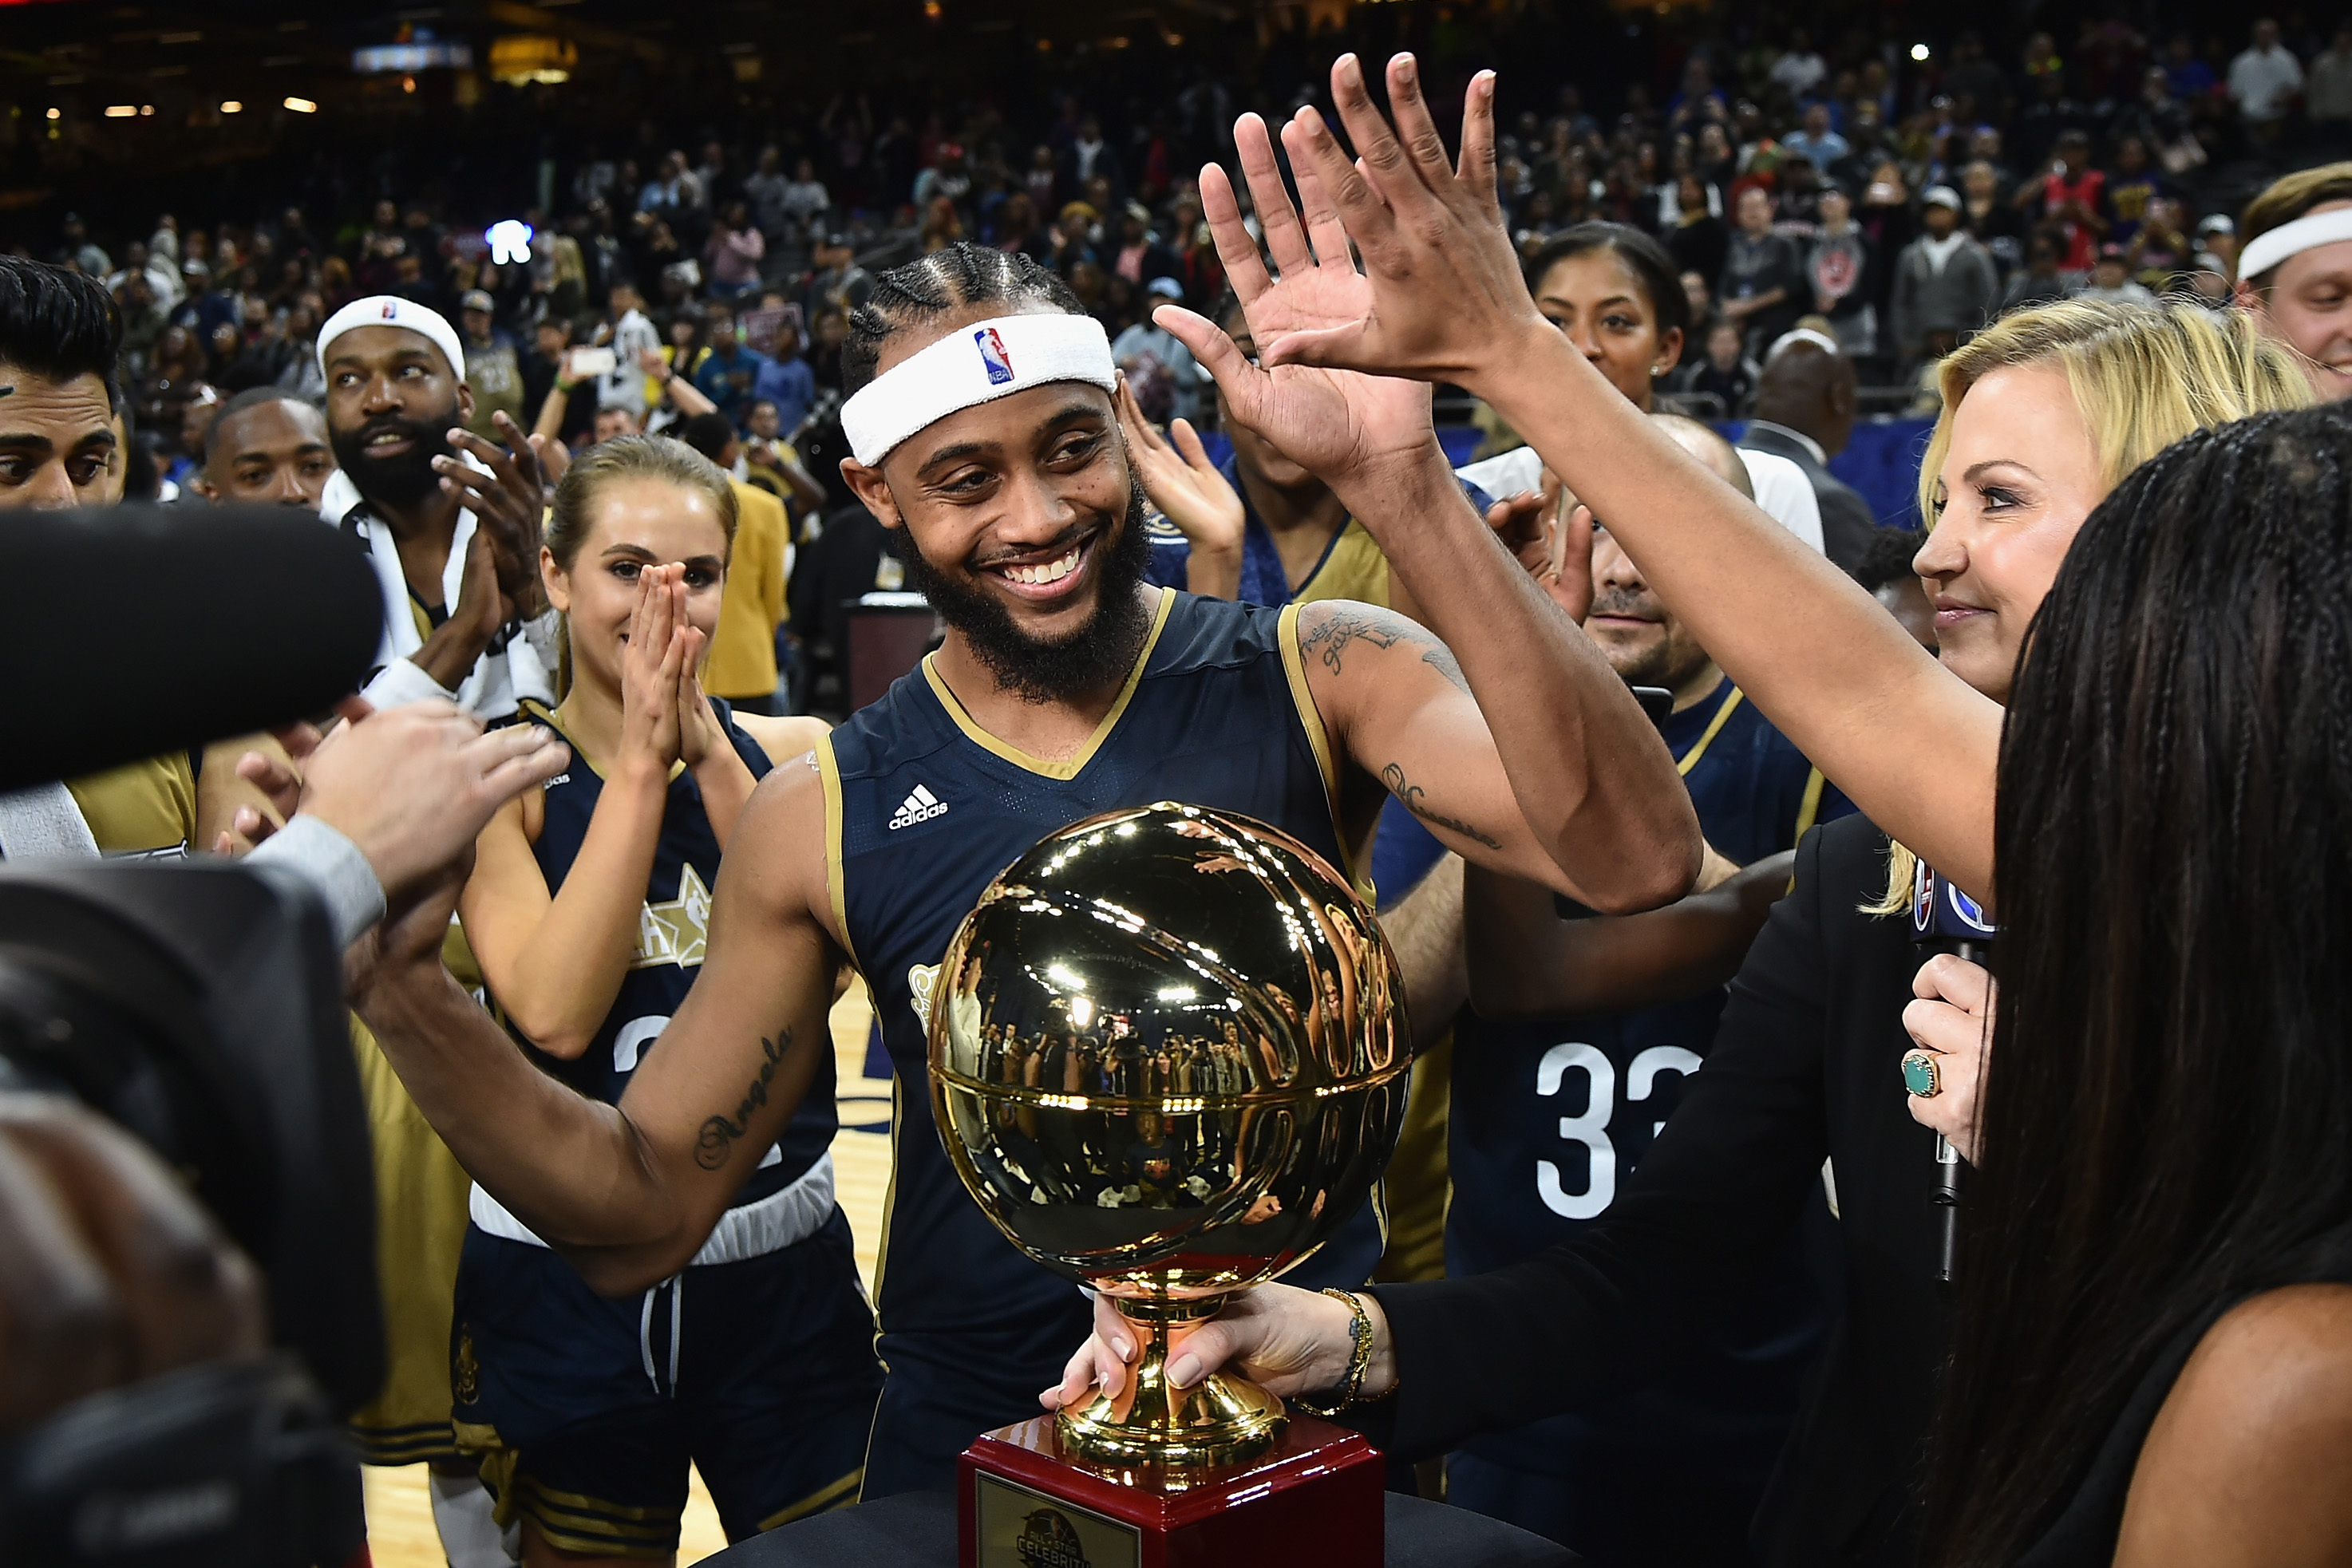 NBA All-Star Celebrity Game 2018 recap: Highlights, reactions